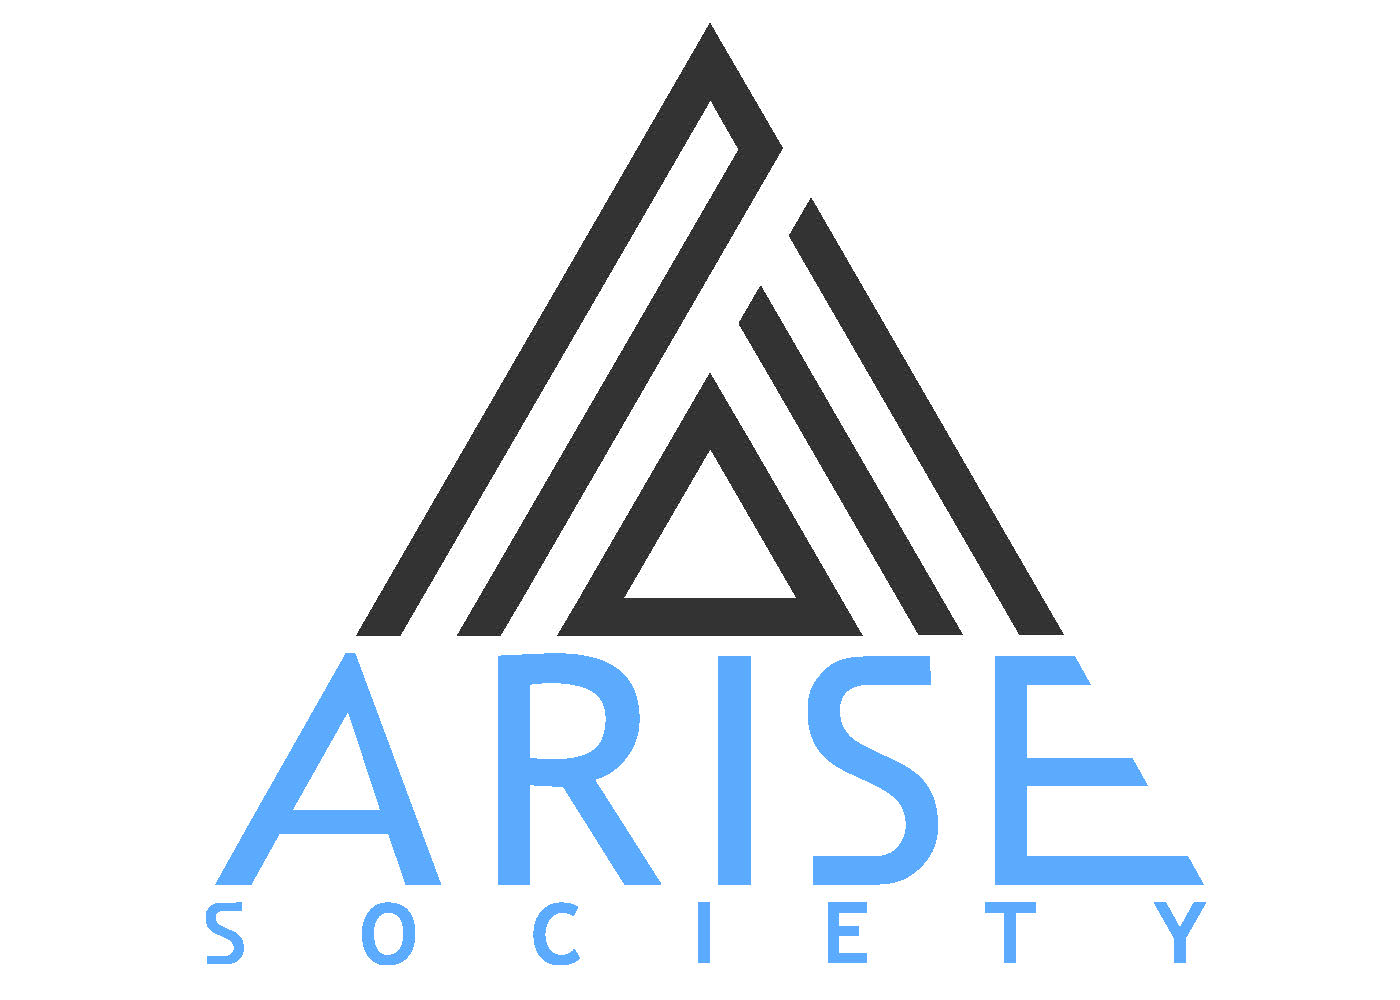 Arise society logo